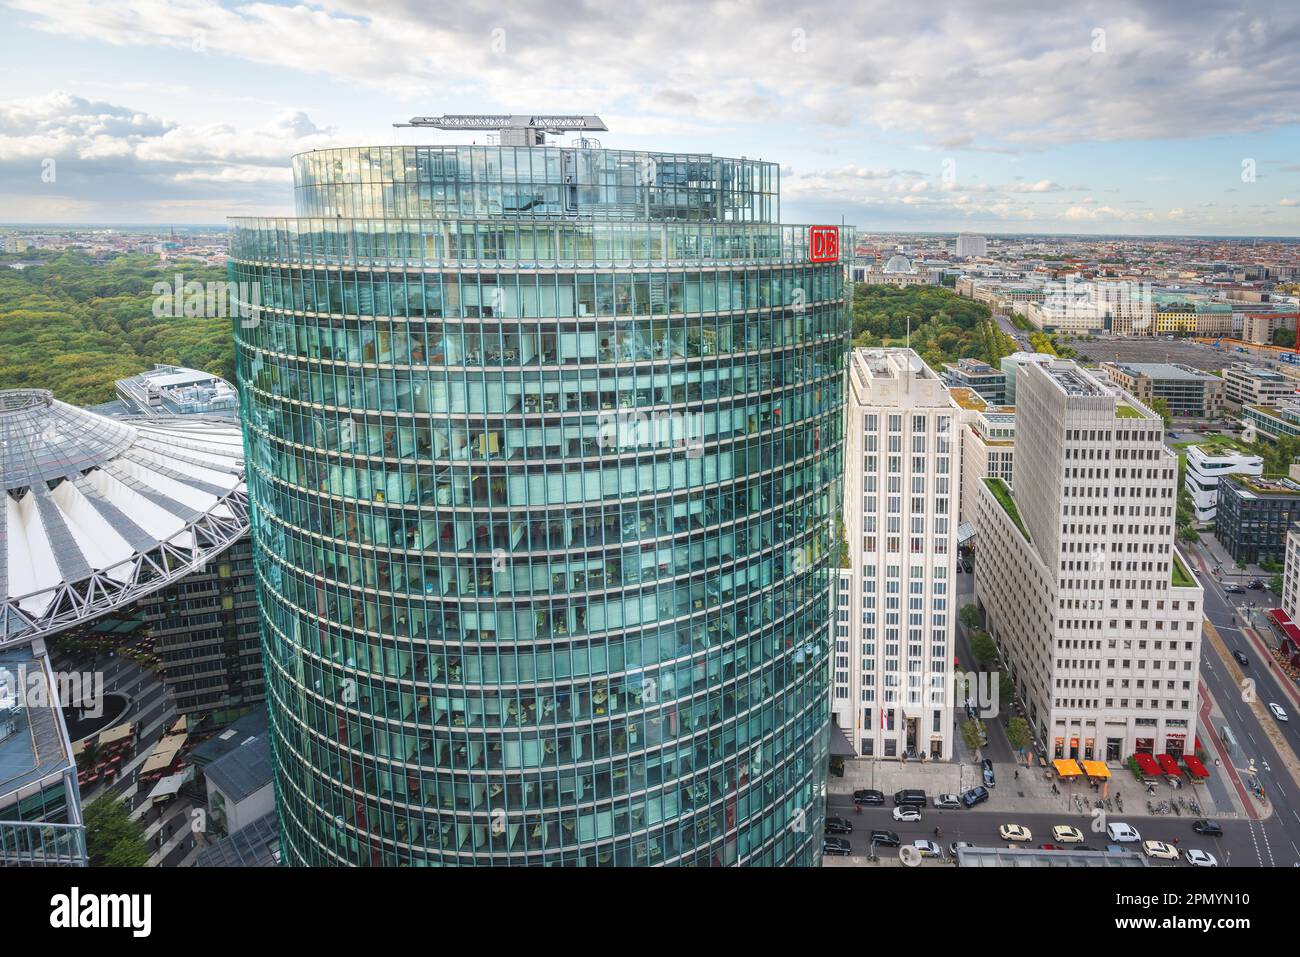 Aerial view of Bahntower - Deutsche Bahn headquarters - at Potsdamer Platz - Berlin, Germany Stock Photo